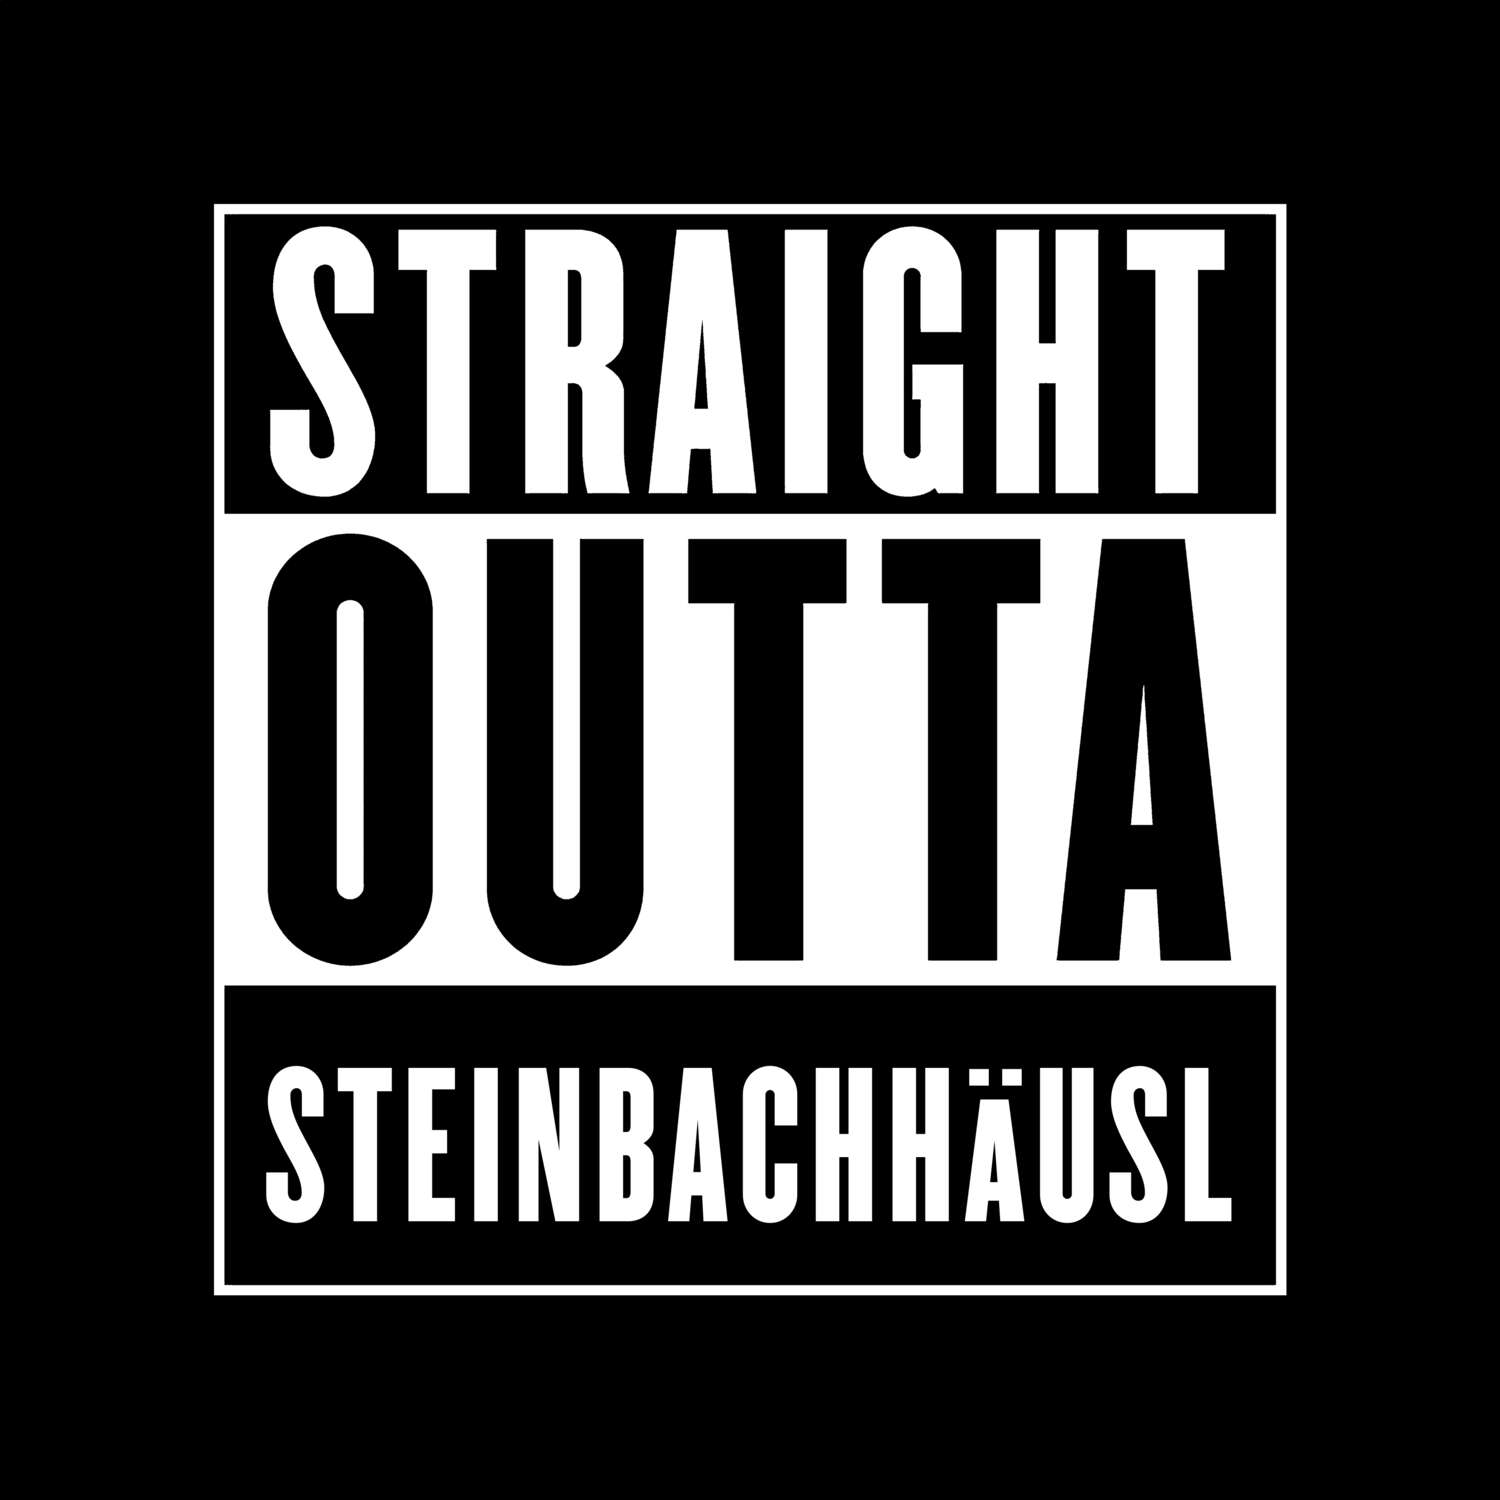 Steinbachhäusl T-Shirt »Straight Outta«